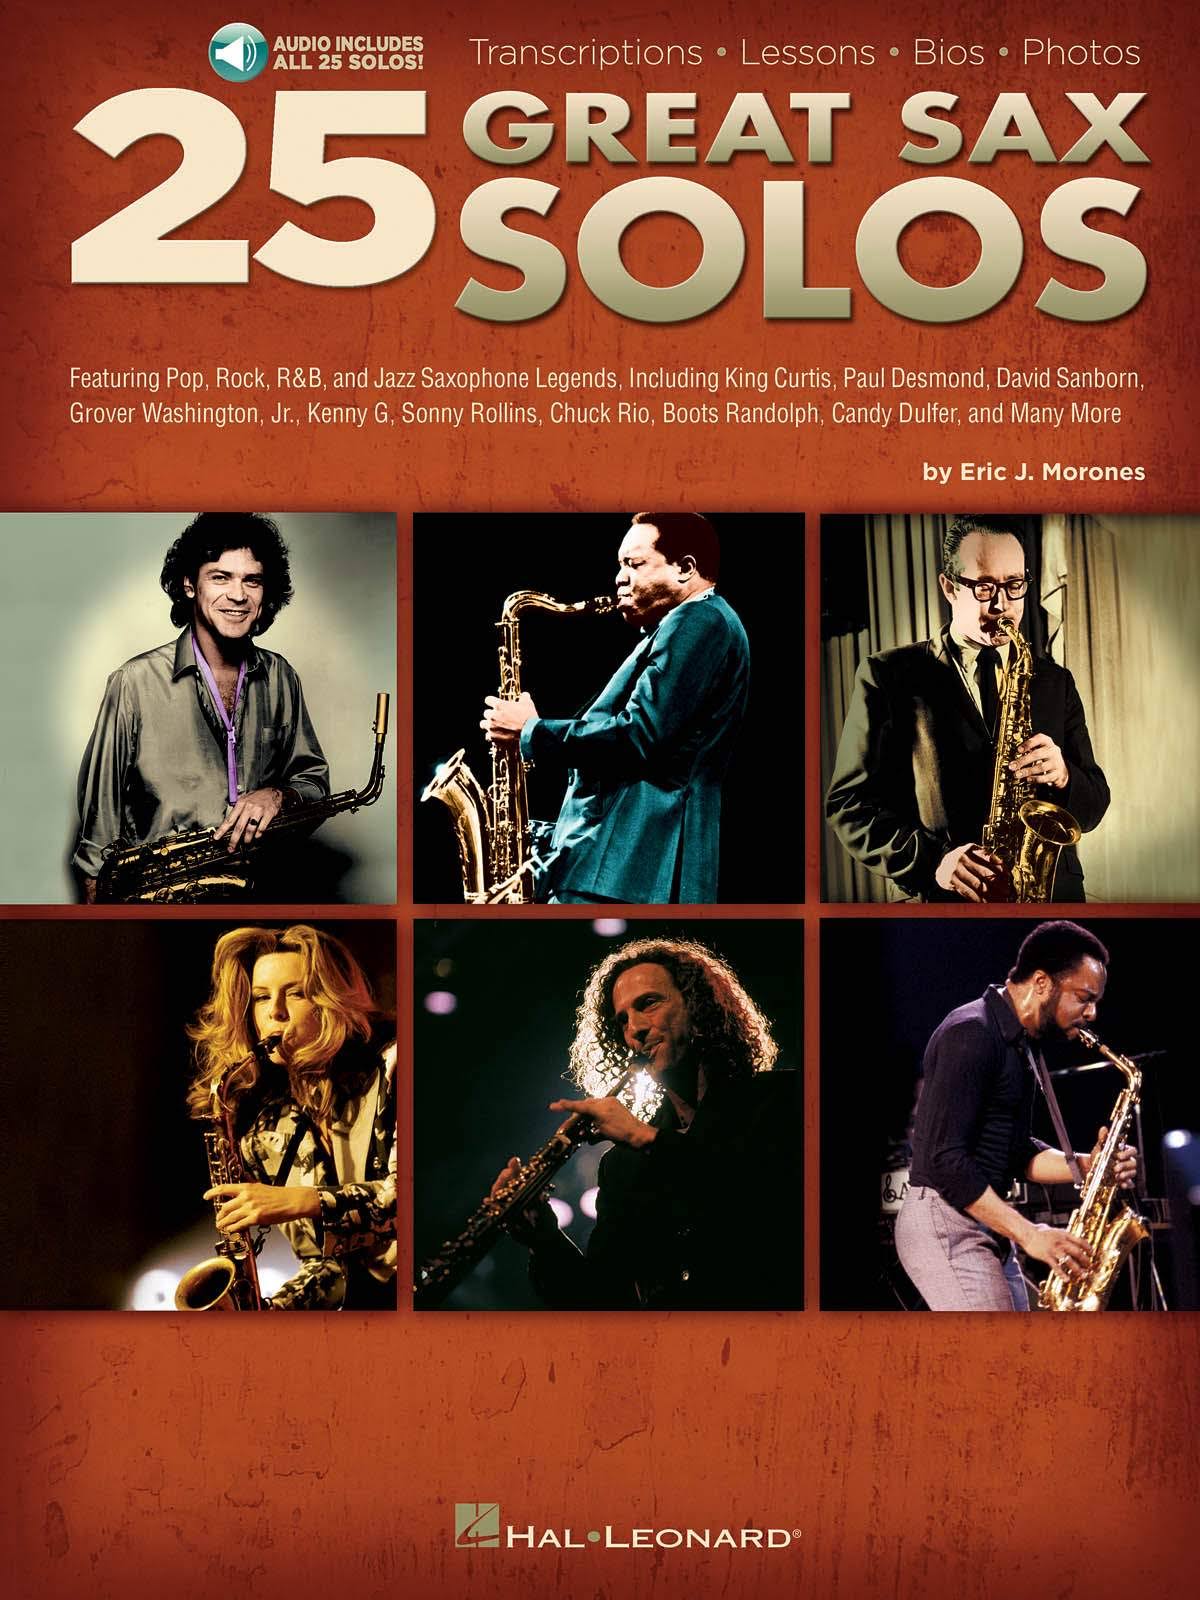 25 Great Sax Solos - Transcriptions * Lessons * Bios * Photos